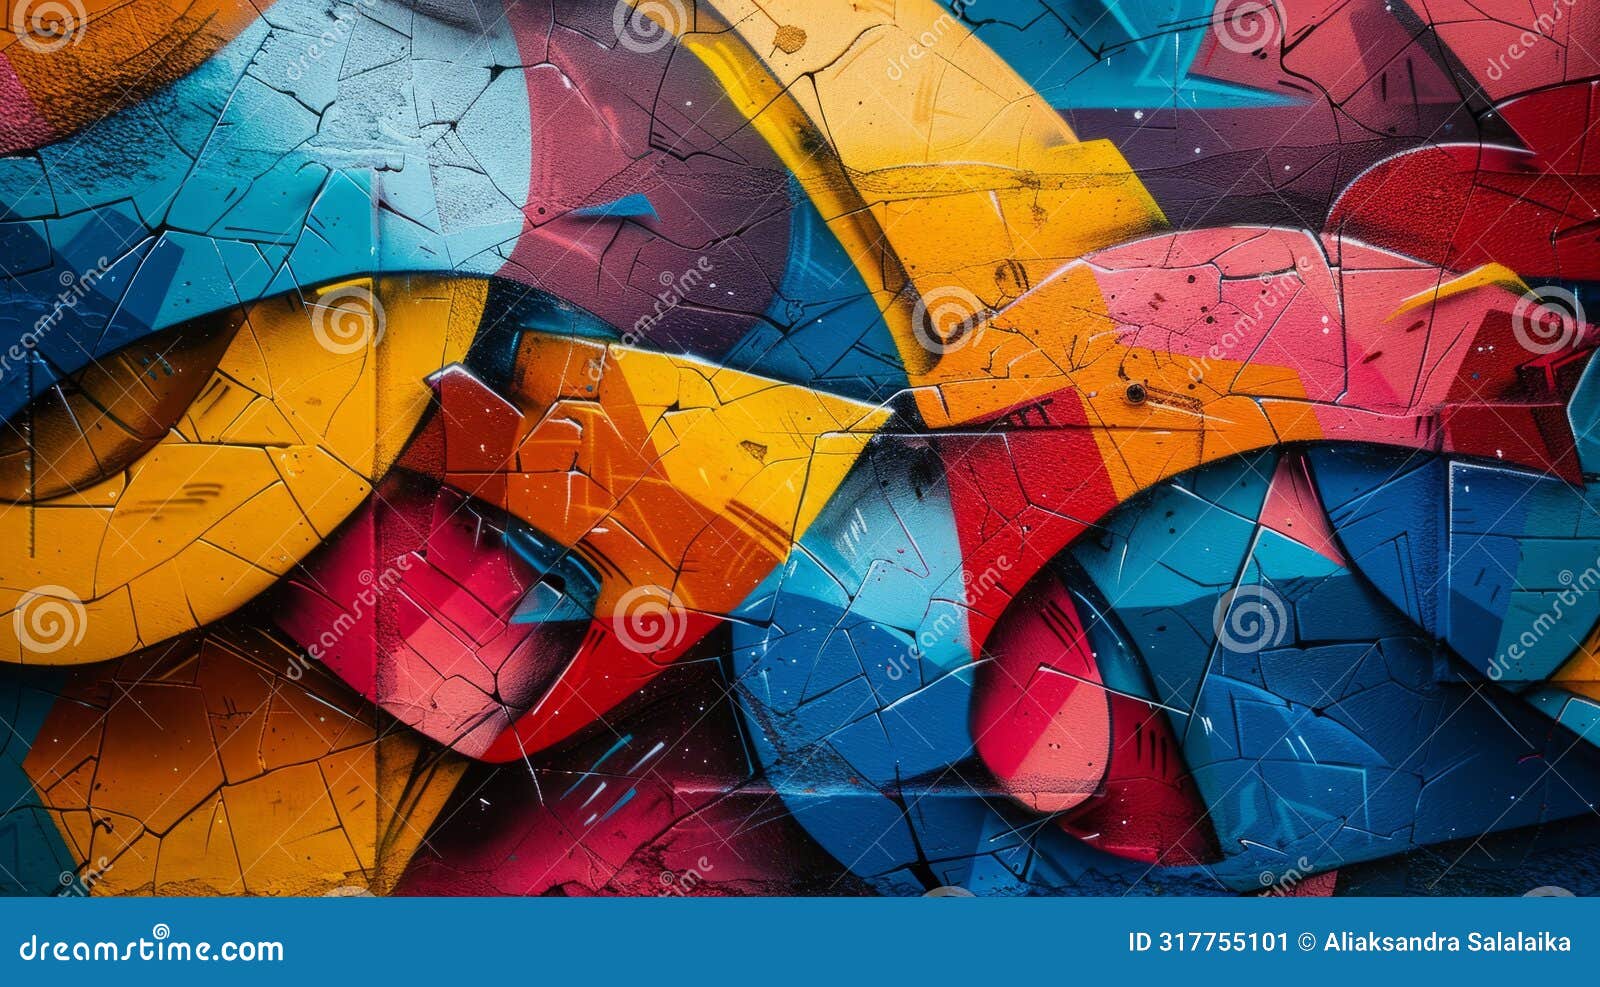 urban graffiti art, vibrant graffiti letters intertwining, forming a captivating and dynamic  on an urban wall, a